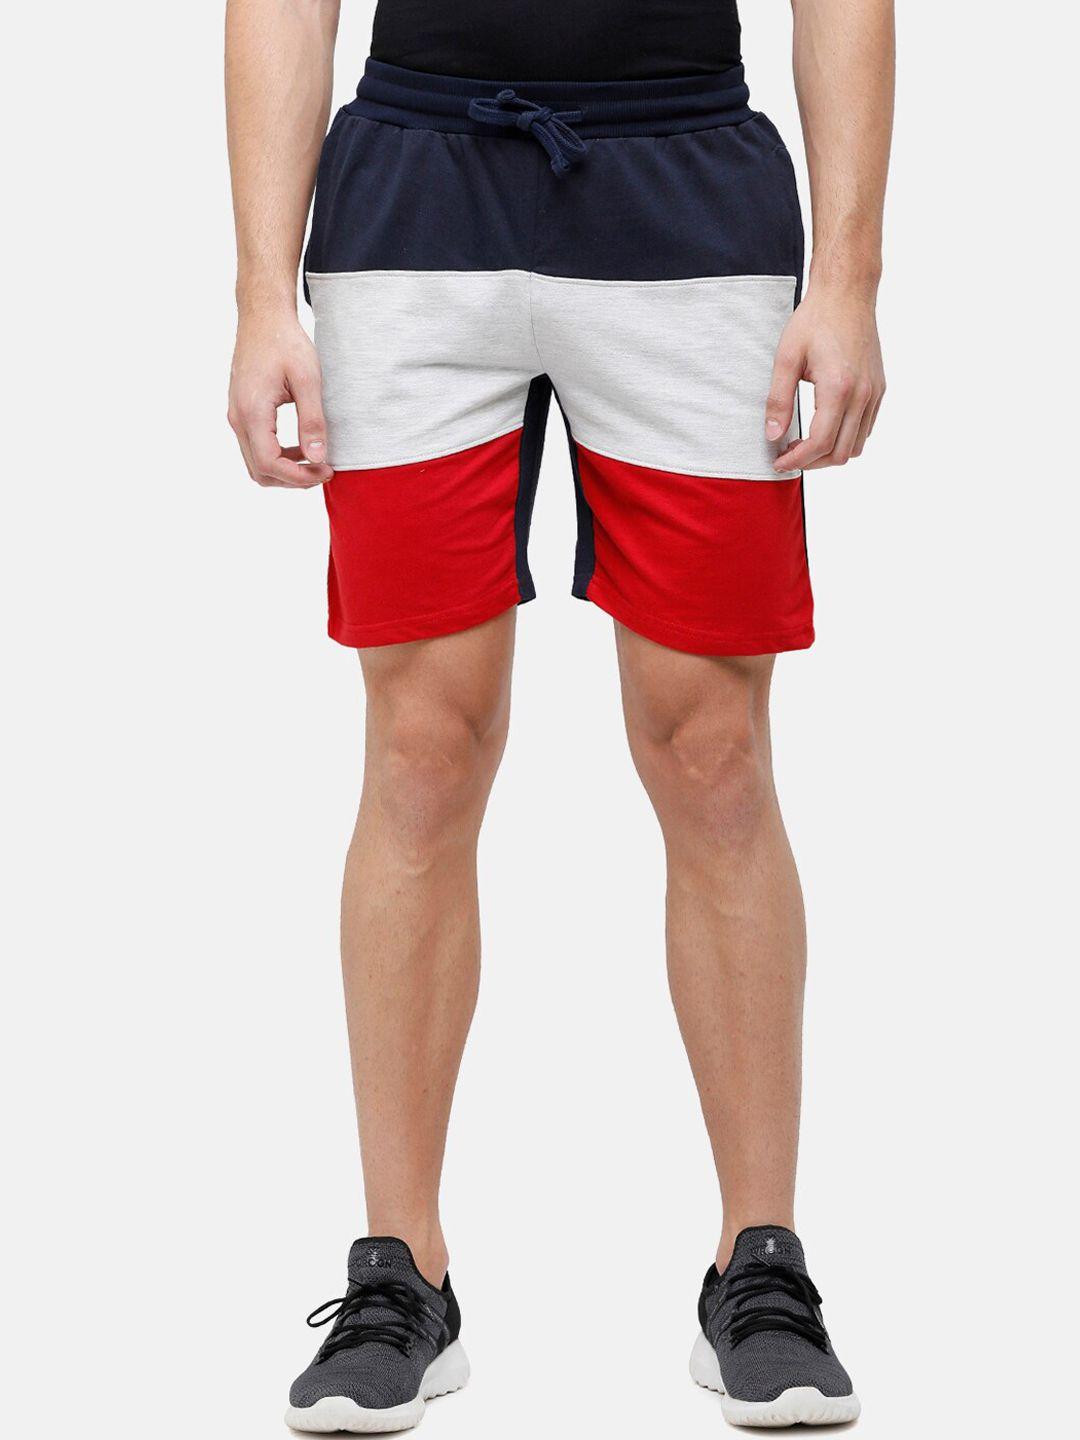 madsto-men-colourblocked-pure-cotton-sports-shorts